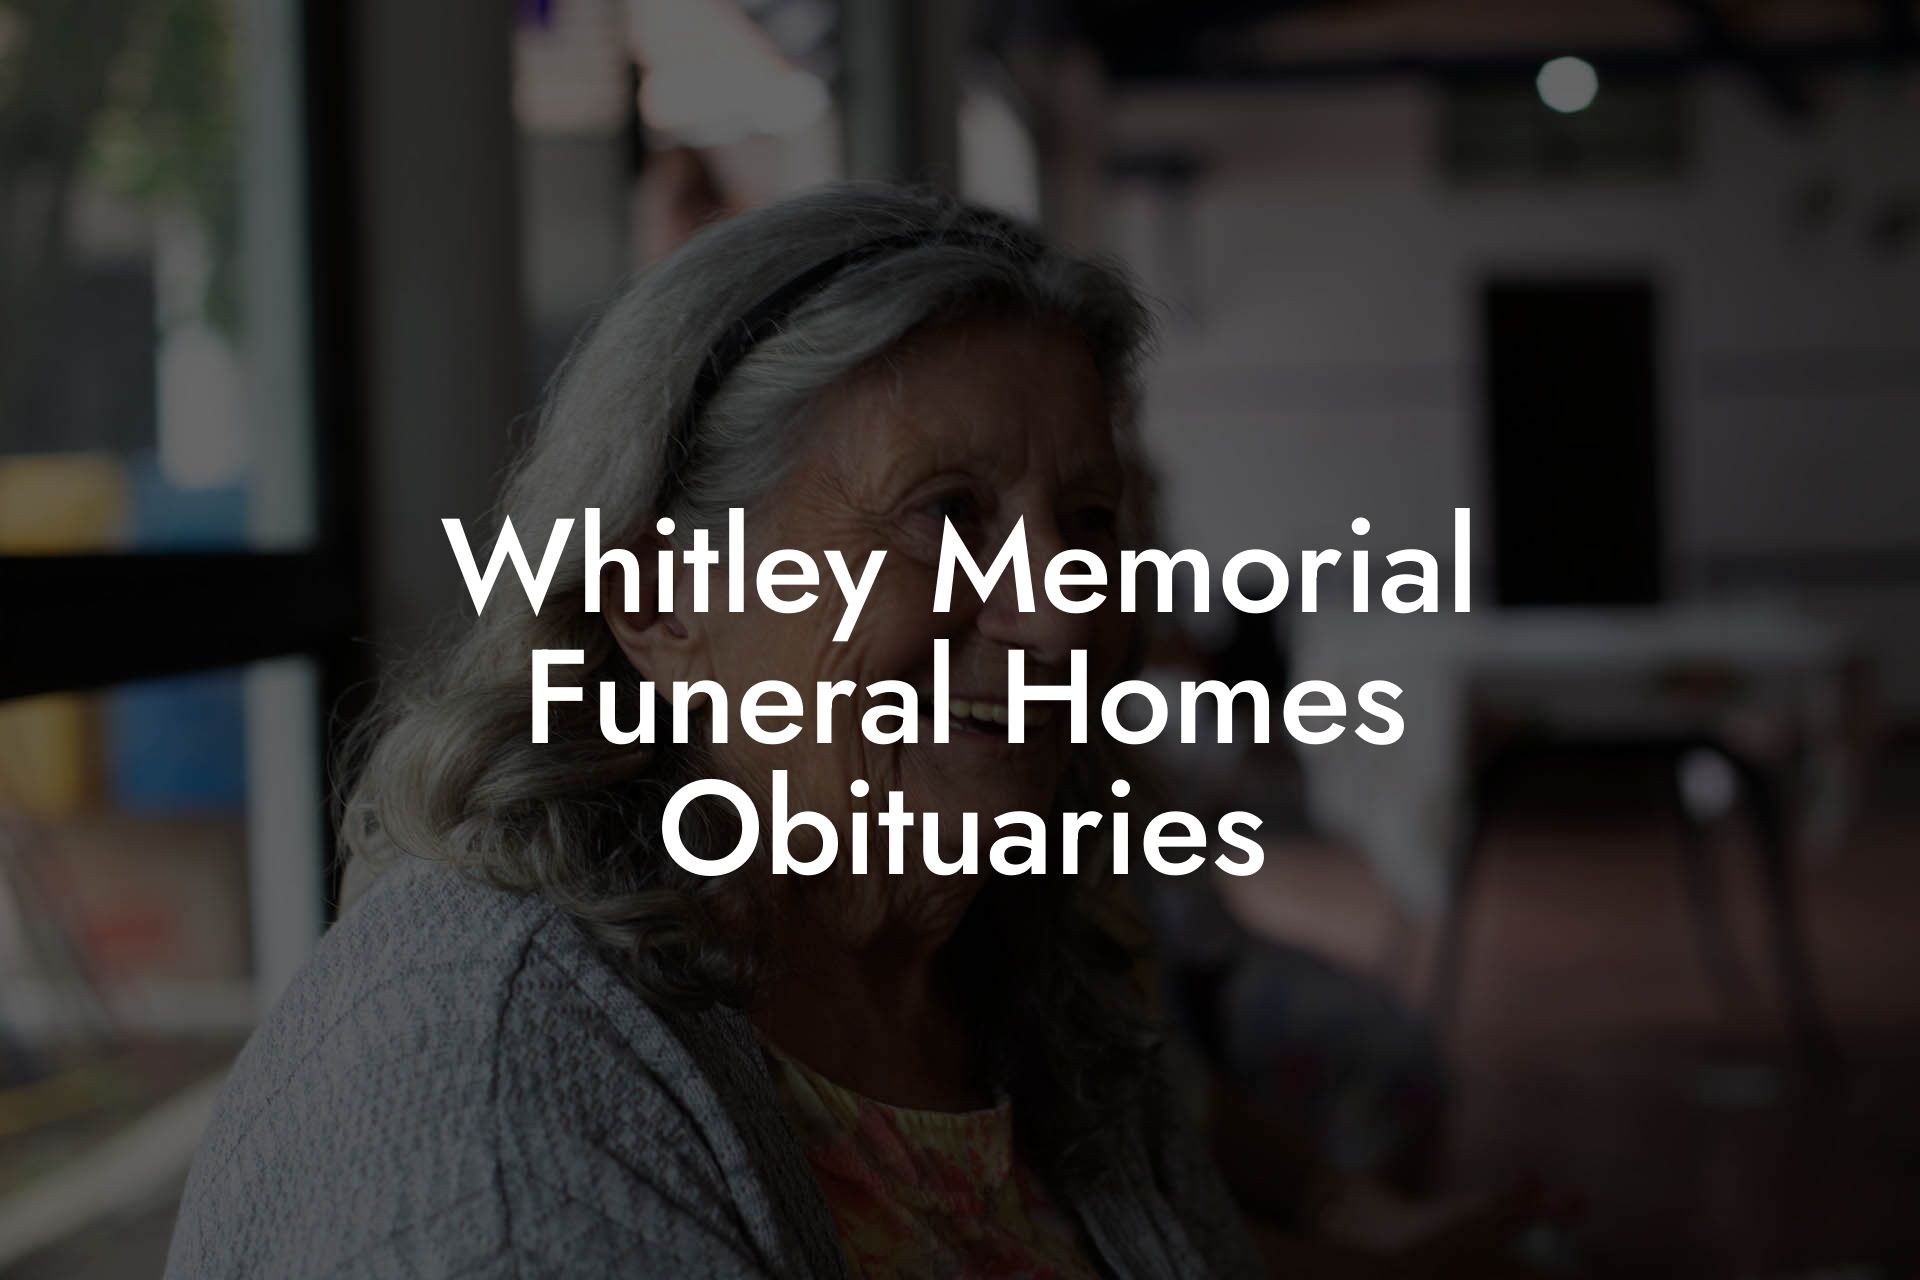 Whitley Memorial Funeral Homes Obituaries